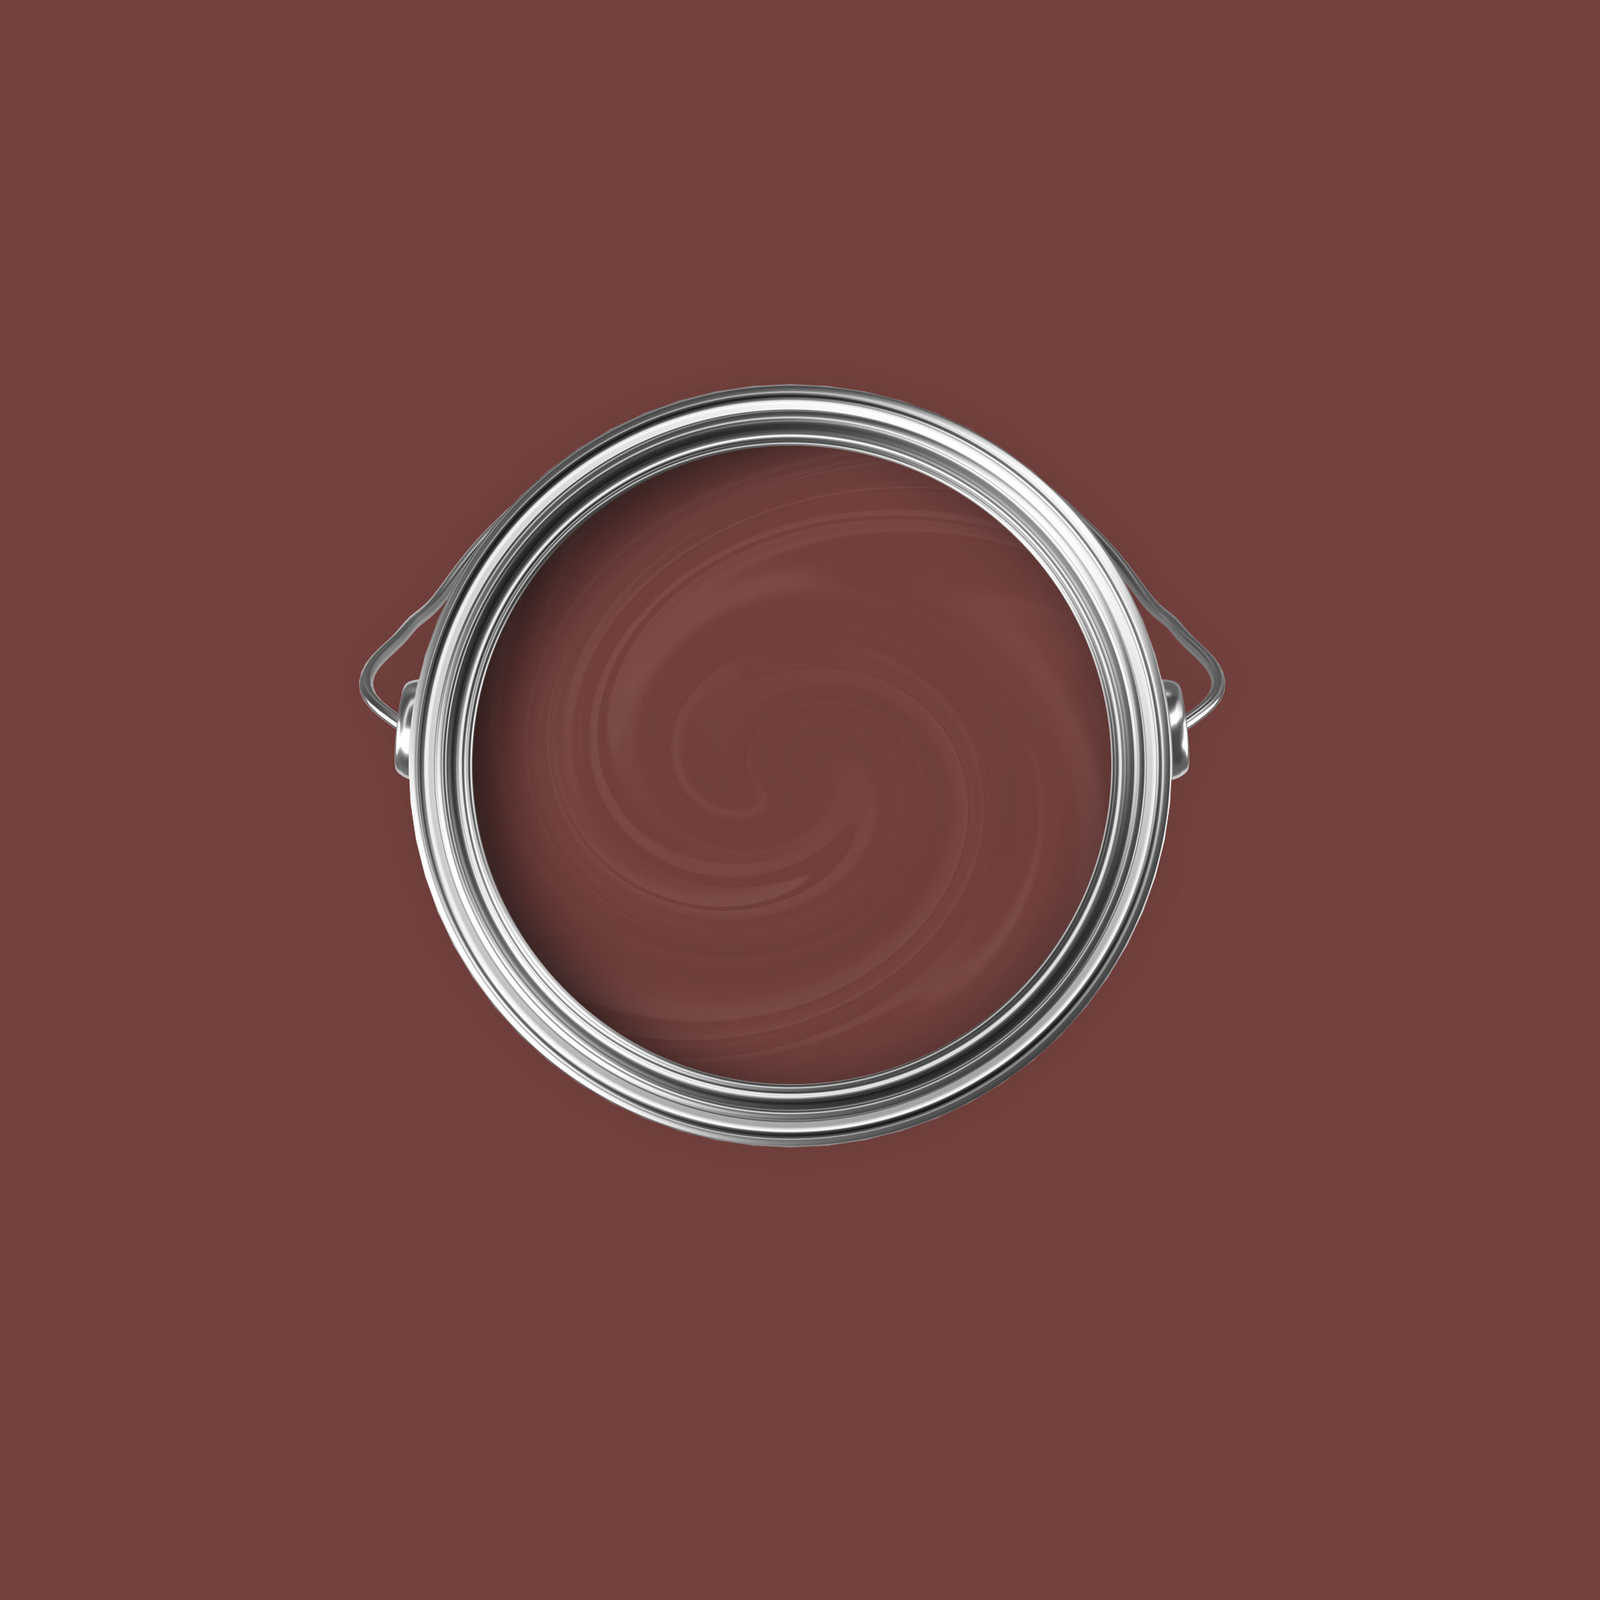             Peinture murale Premium rouge châtaigne »Luxury Lipstick« NW1007 – 2,5 litres
        